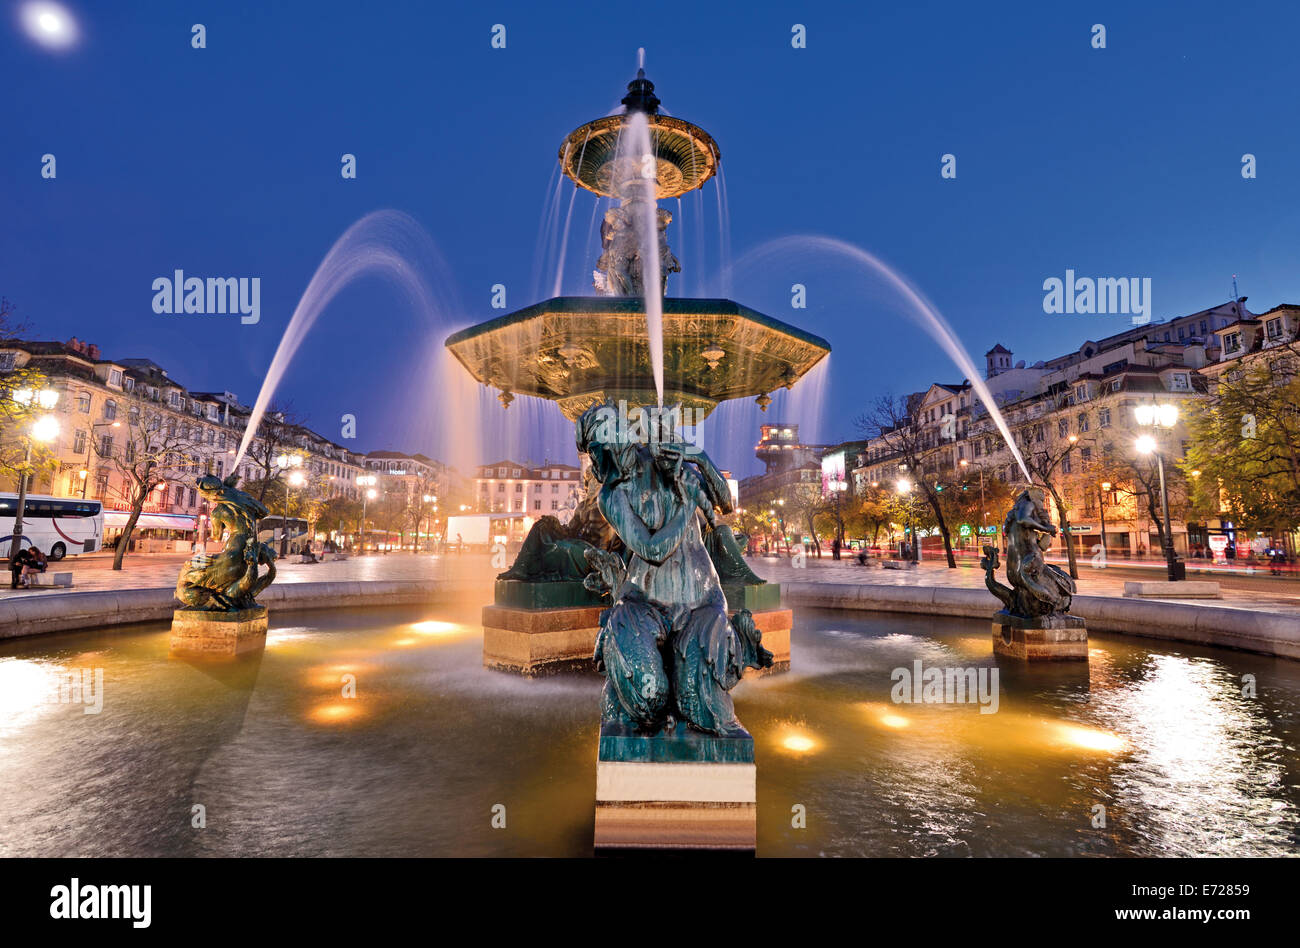 Portugal, Lisbon: Nocturnal illuminated fountain at Rossio Square Stock Photo